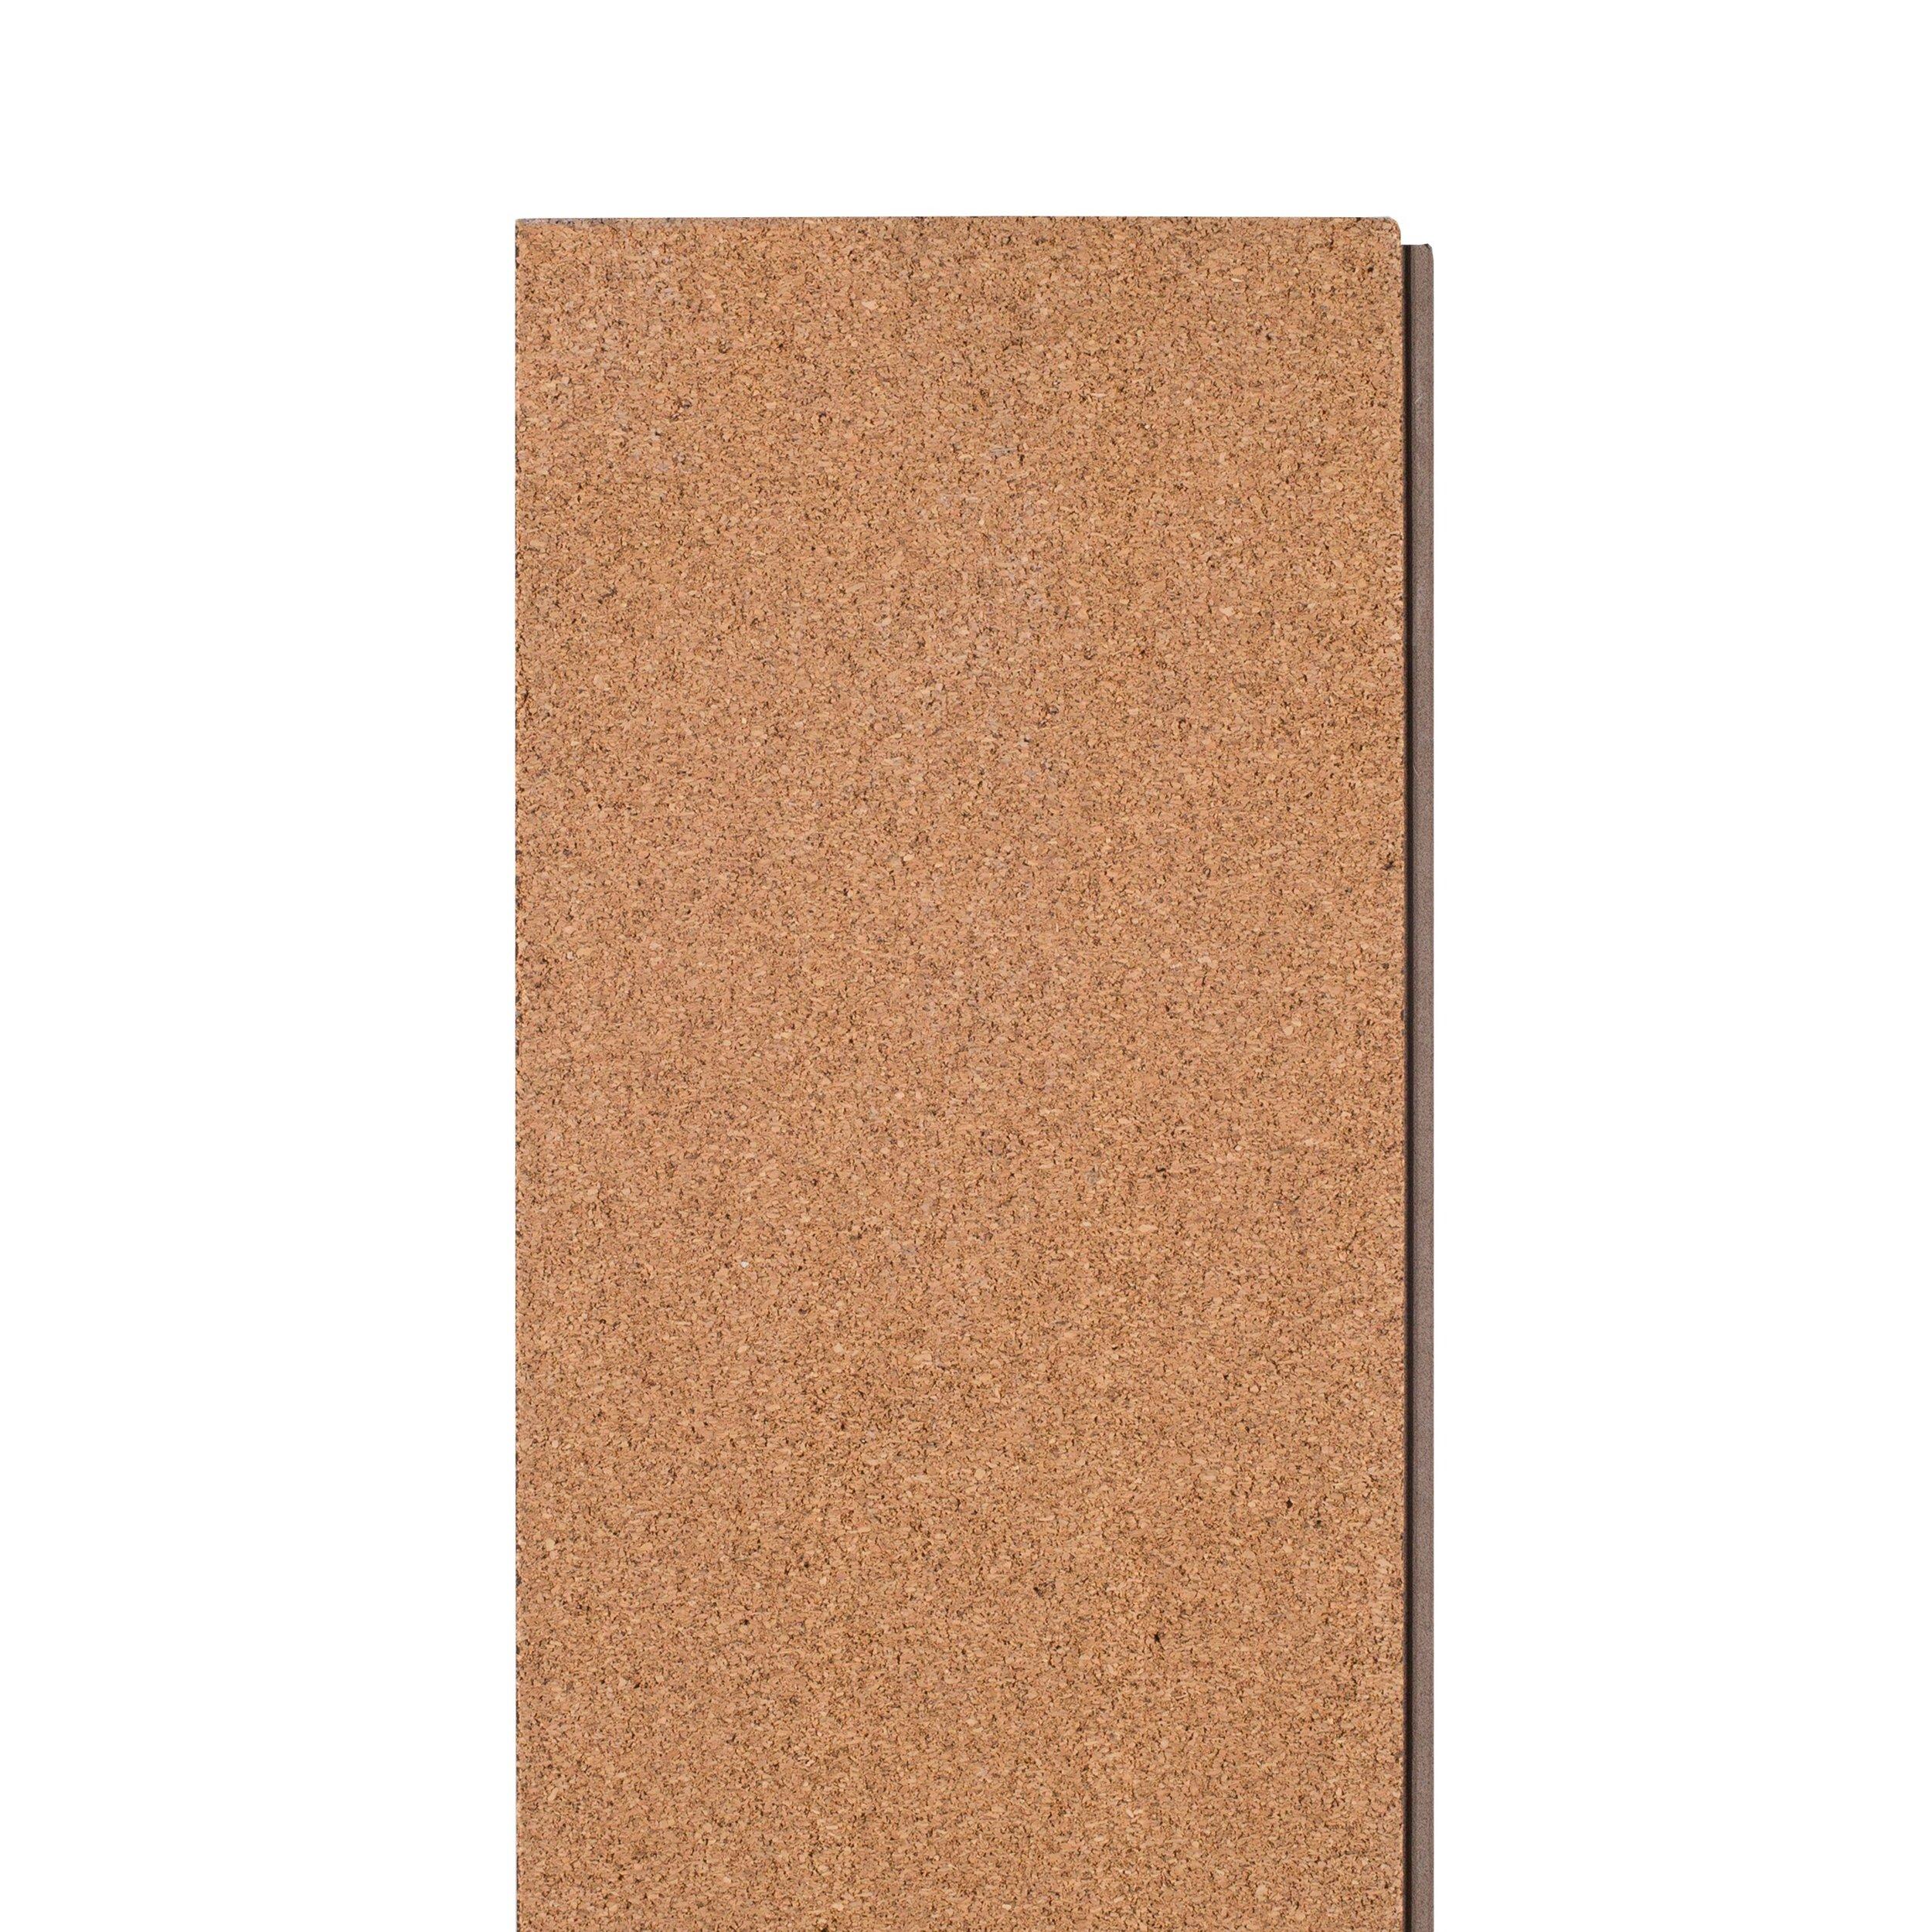 Arendahl Oak Rigid Core Luxury Vinyl Plank - Cork Back